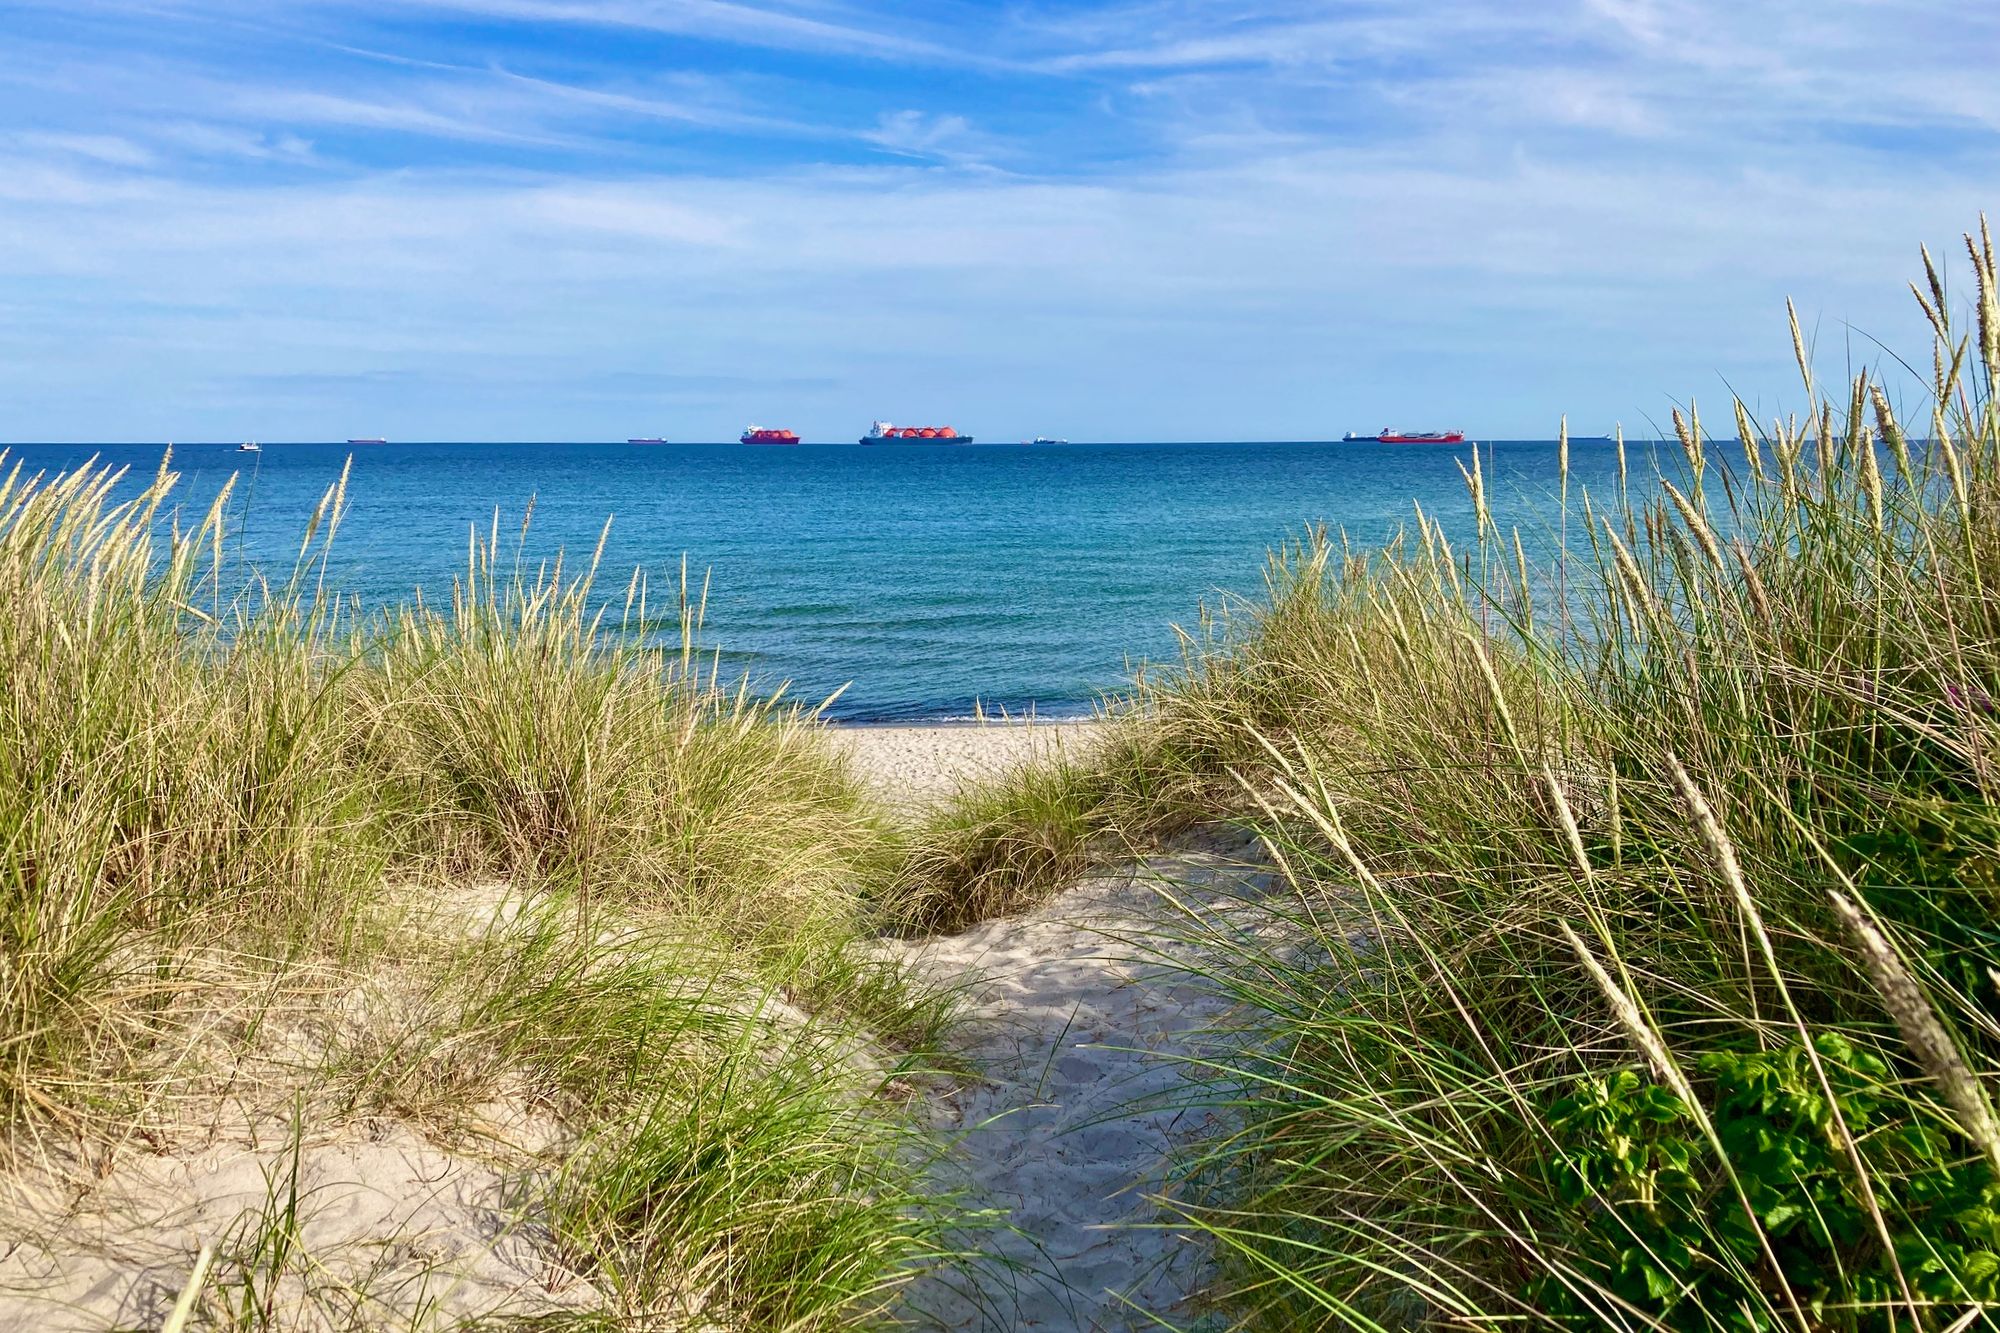 Strand in Dänemark